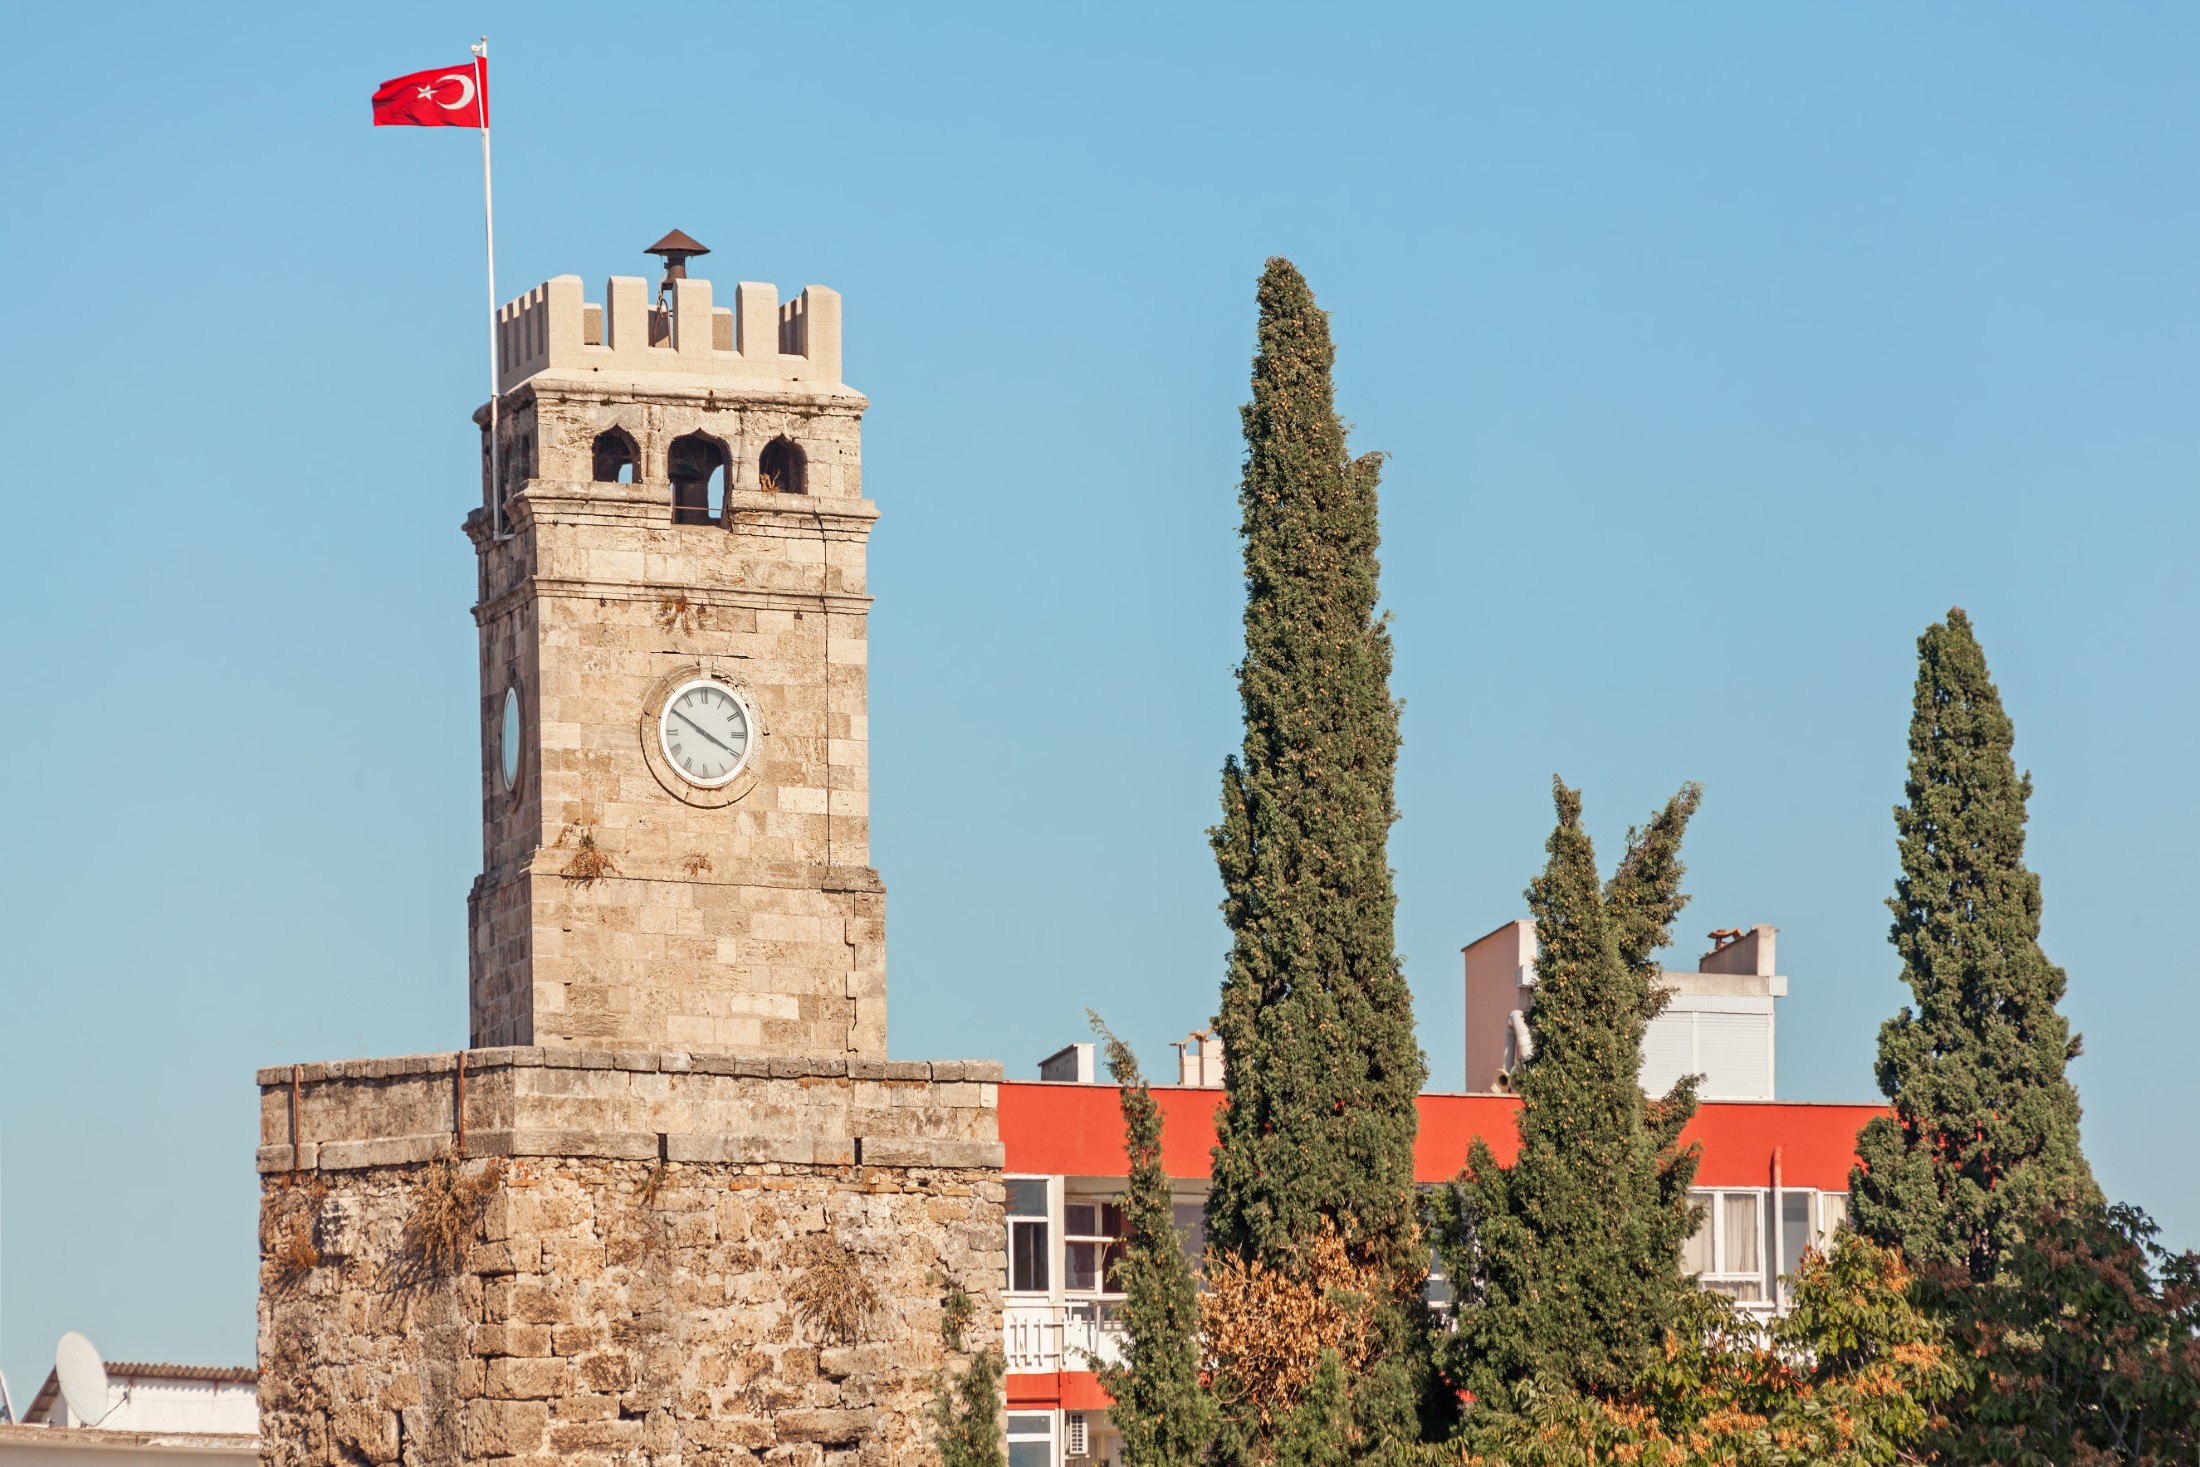 Aincient clock tower Saat Kulesi. Antalya, Turkey. Canon 5D Mk II.